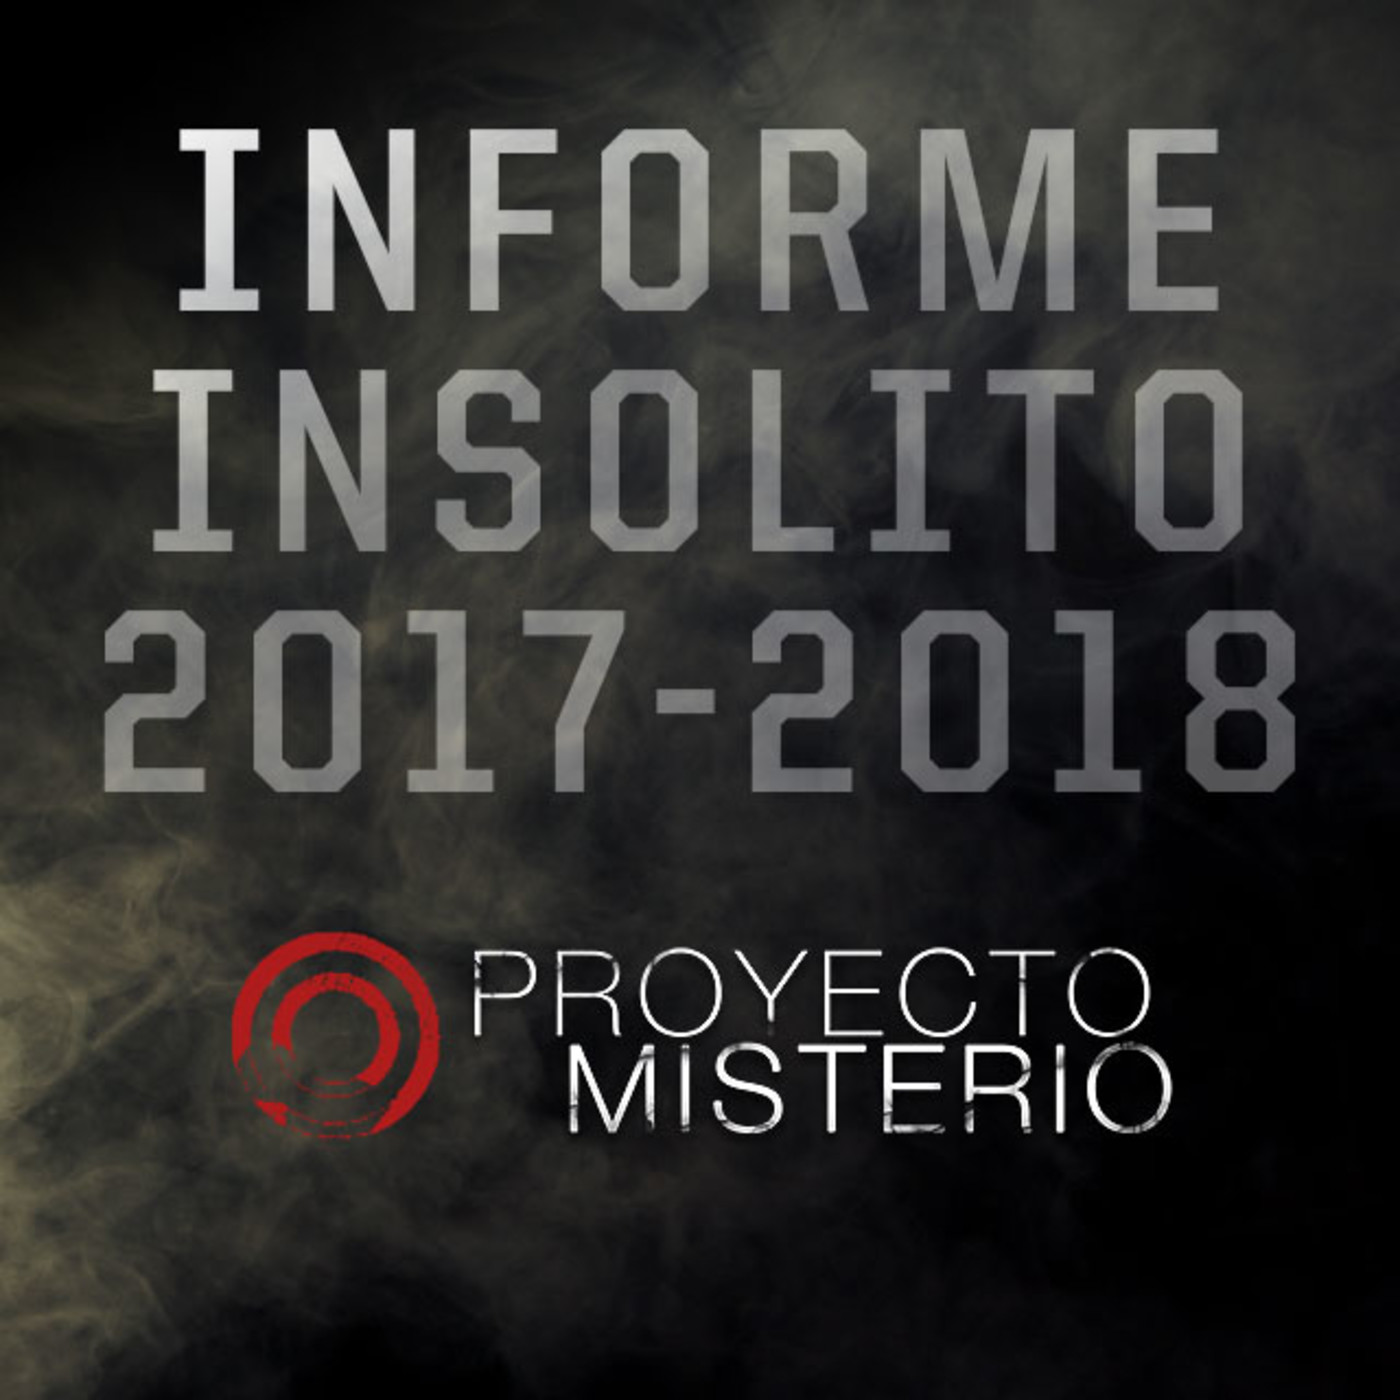 Proyecto Misterio: Informe Insólito 2017-2018